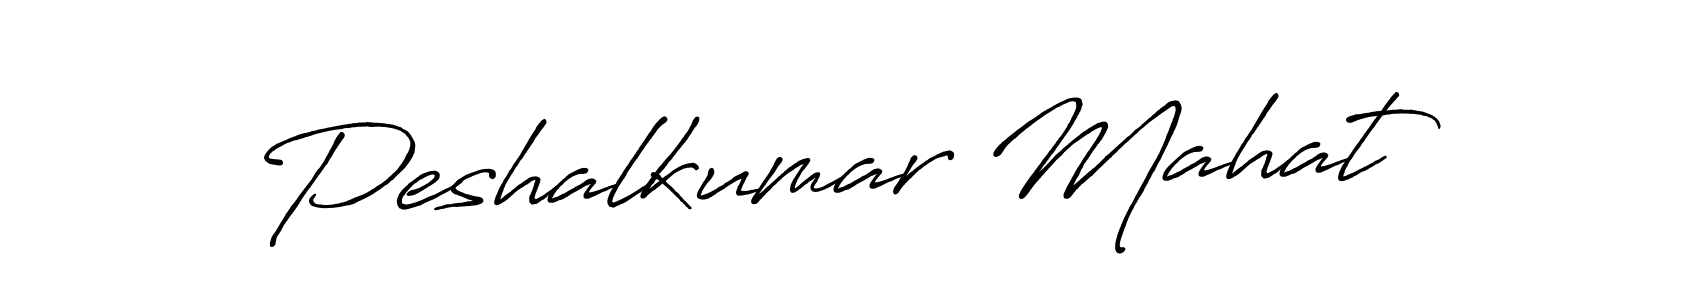 How to Draw Peshalkumar Mahat signature style? Antro_Vectra_Bolder is a latest design signature styles for name Peshalkumar Mahat. Peshalkumar Mahat signature style 7 images and pictures png